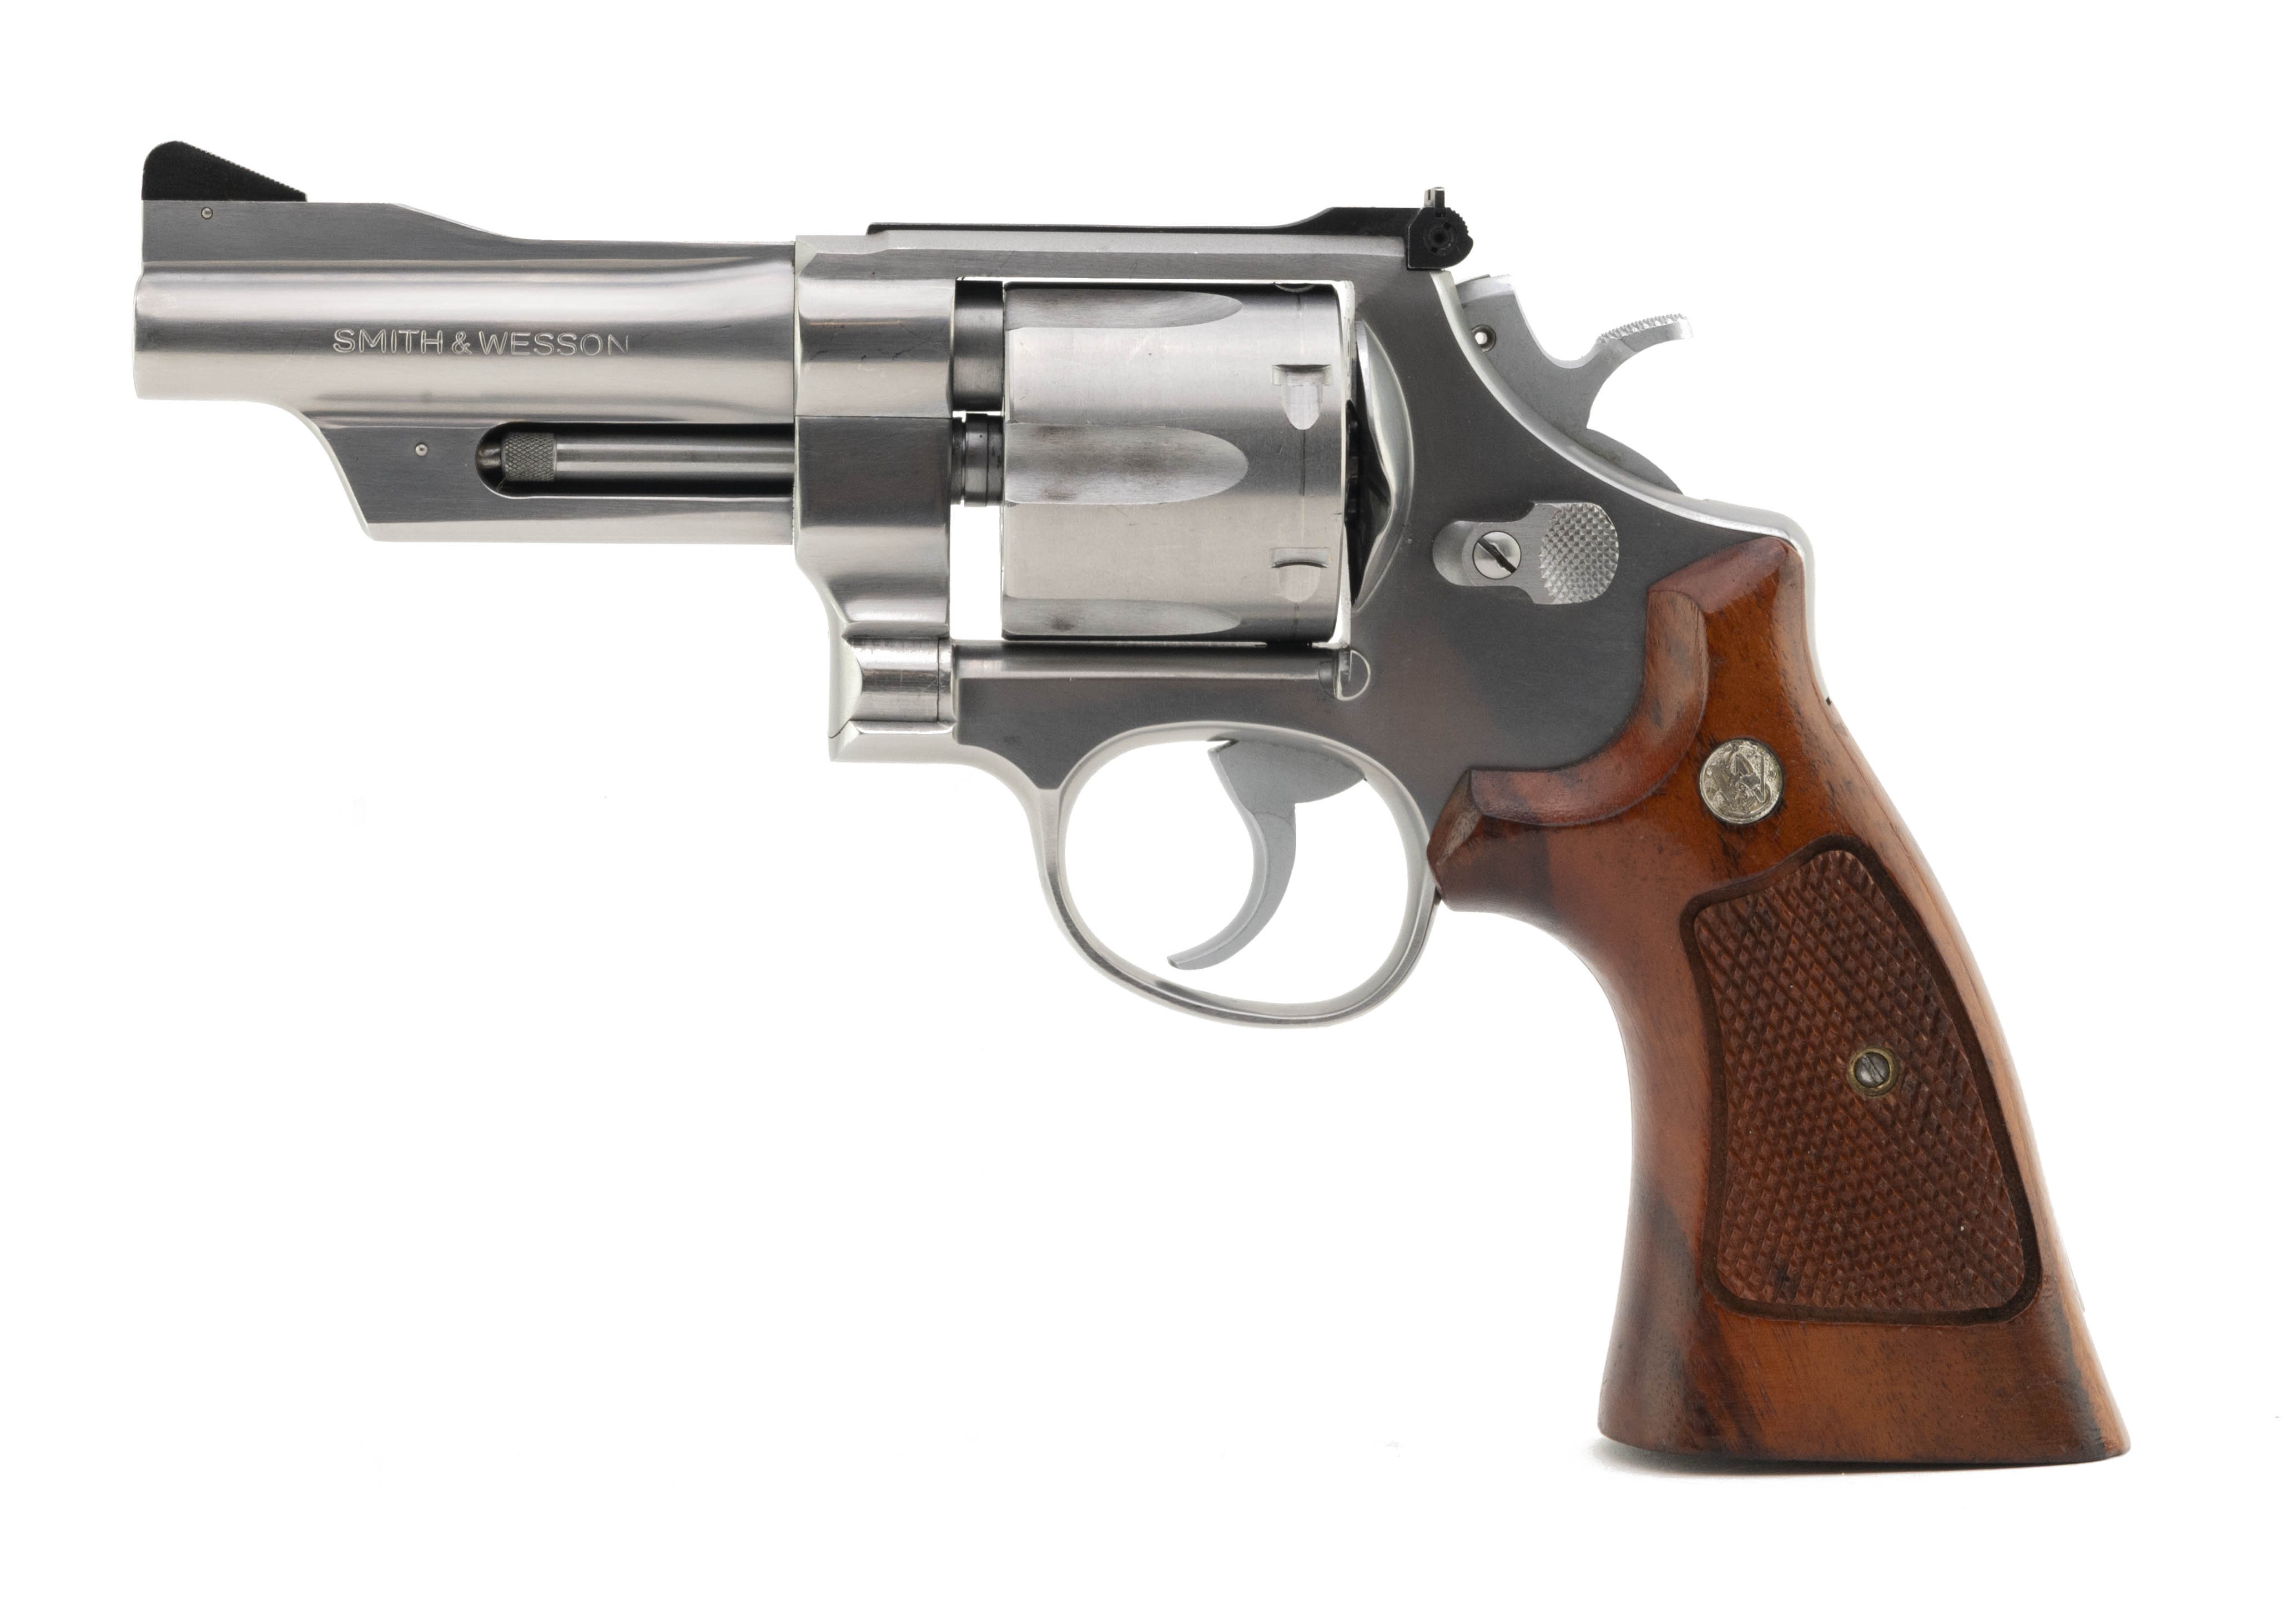 Smith & Wesson 624 .44 Special caliber revolver for sale.